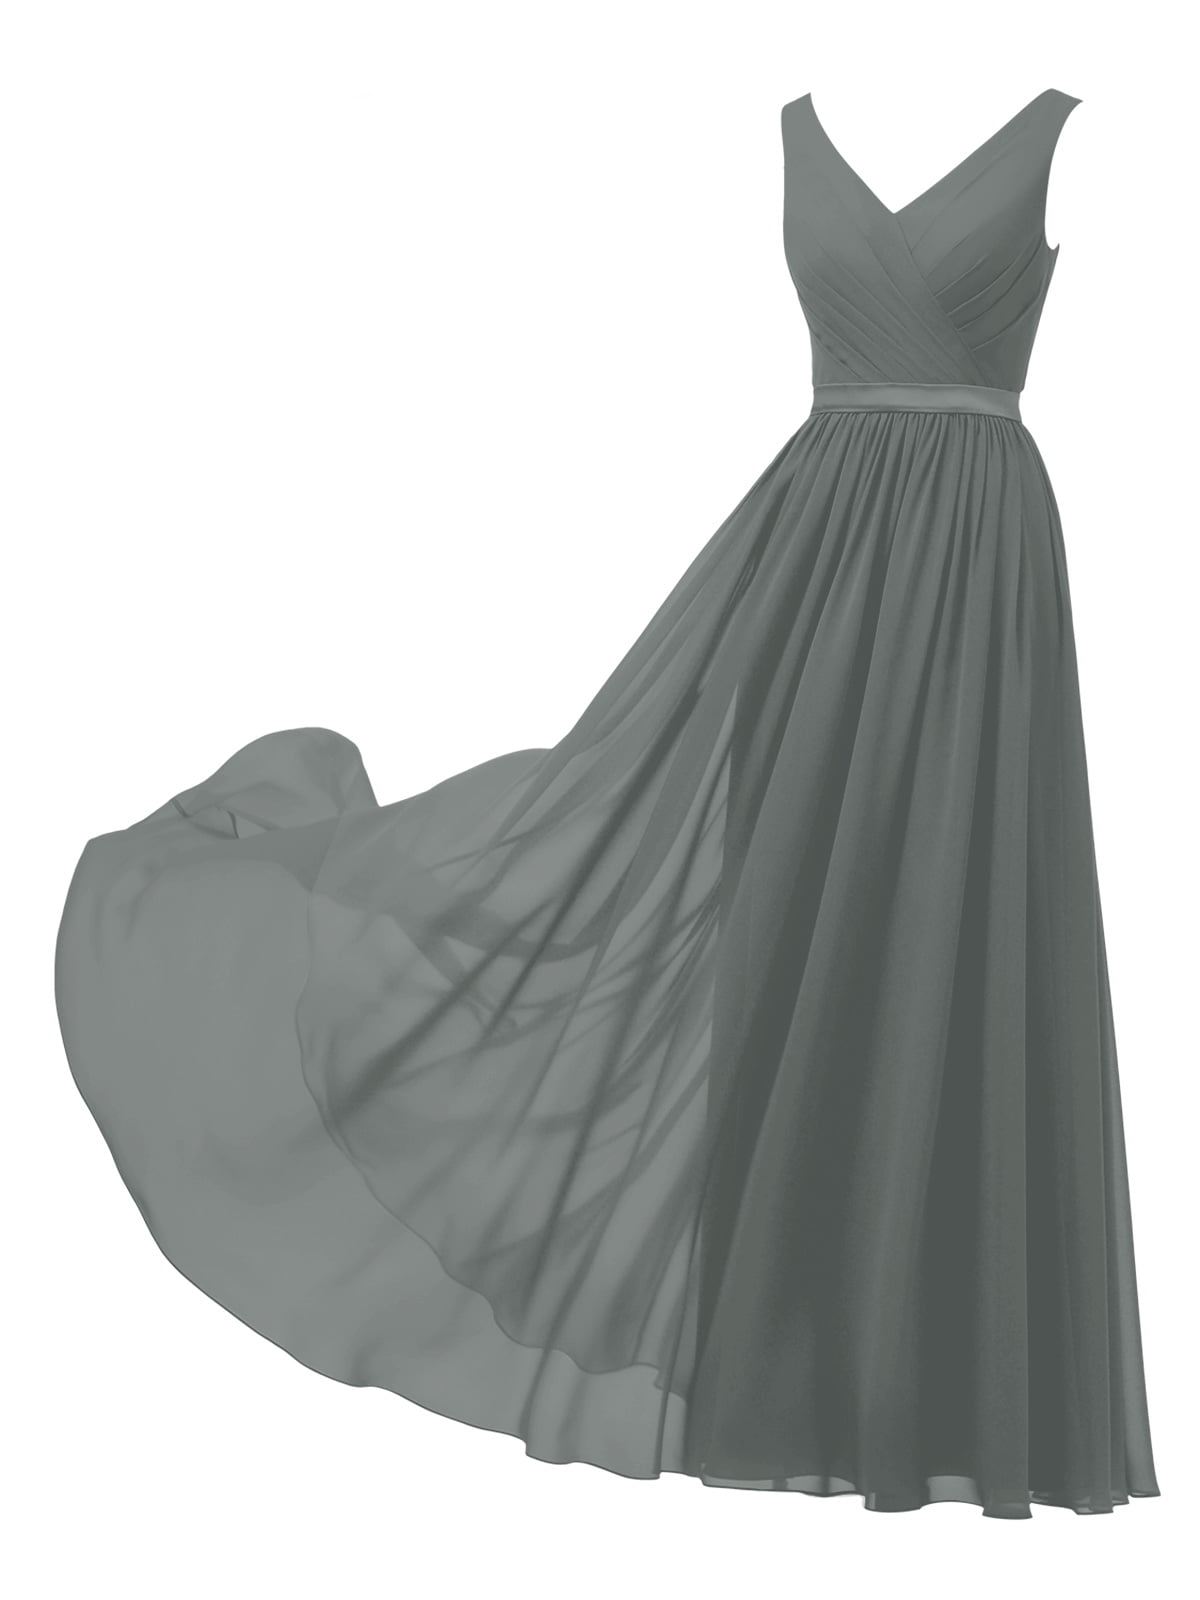 Alicepub V-Neck Chiffon Bridesmaid Dress Long Formal Gown Party Evening Dress Sleeveless Regency US6 